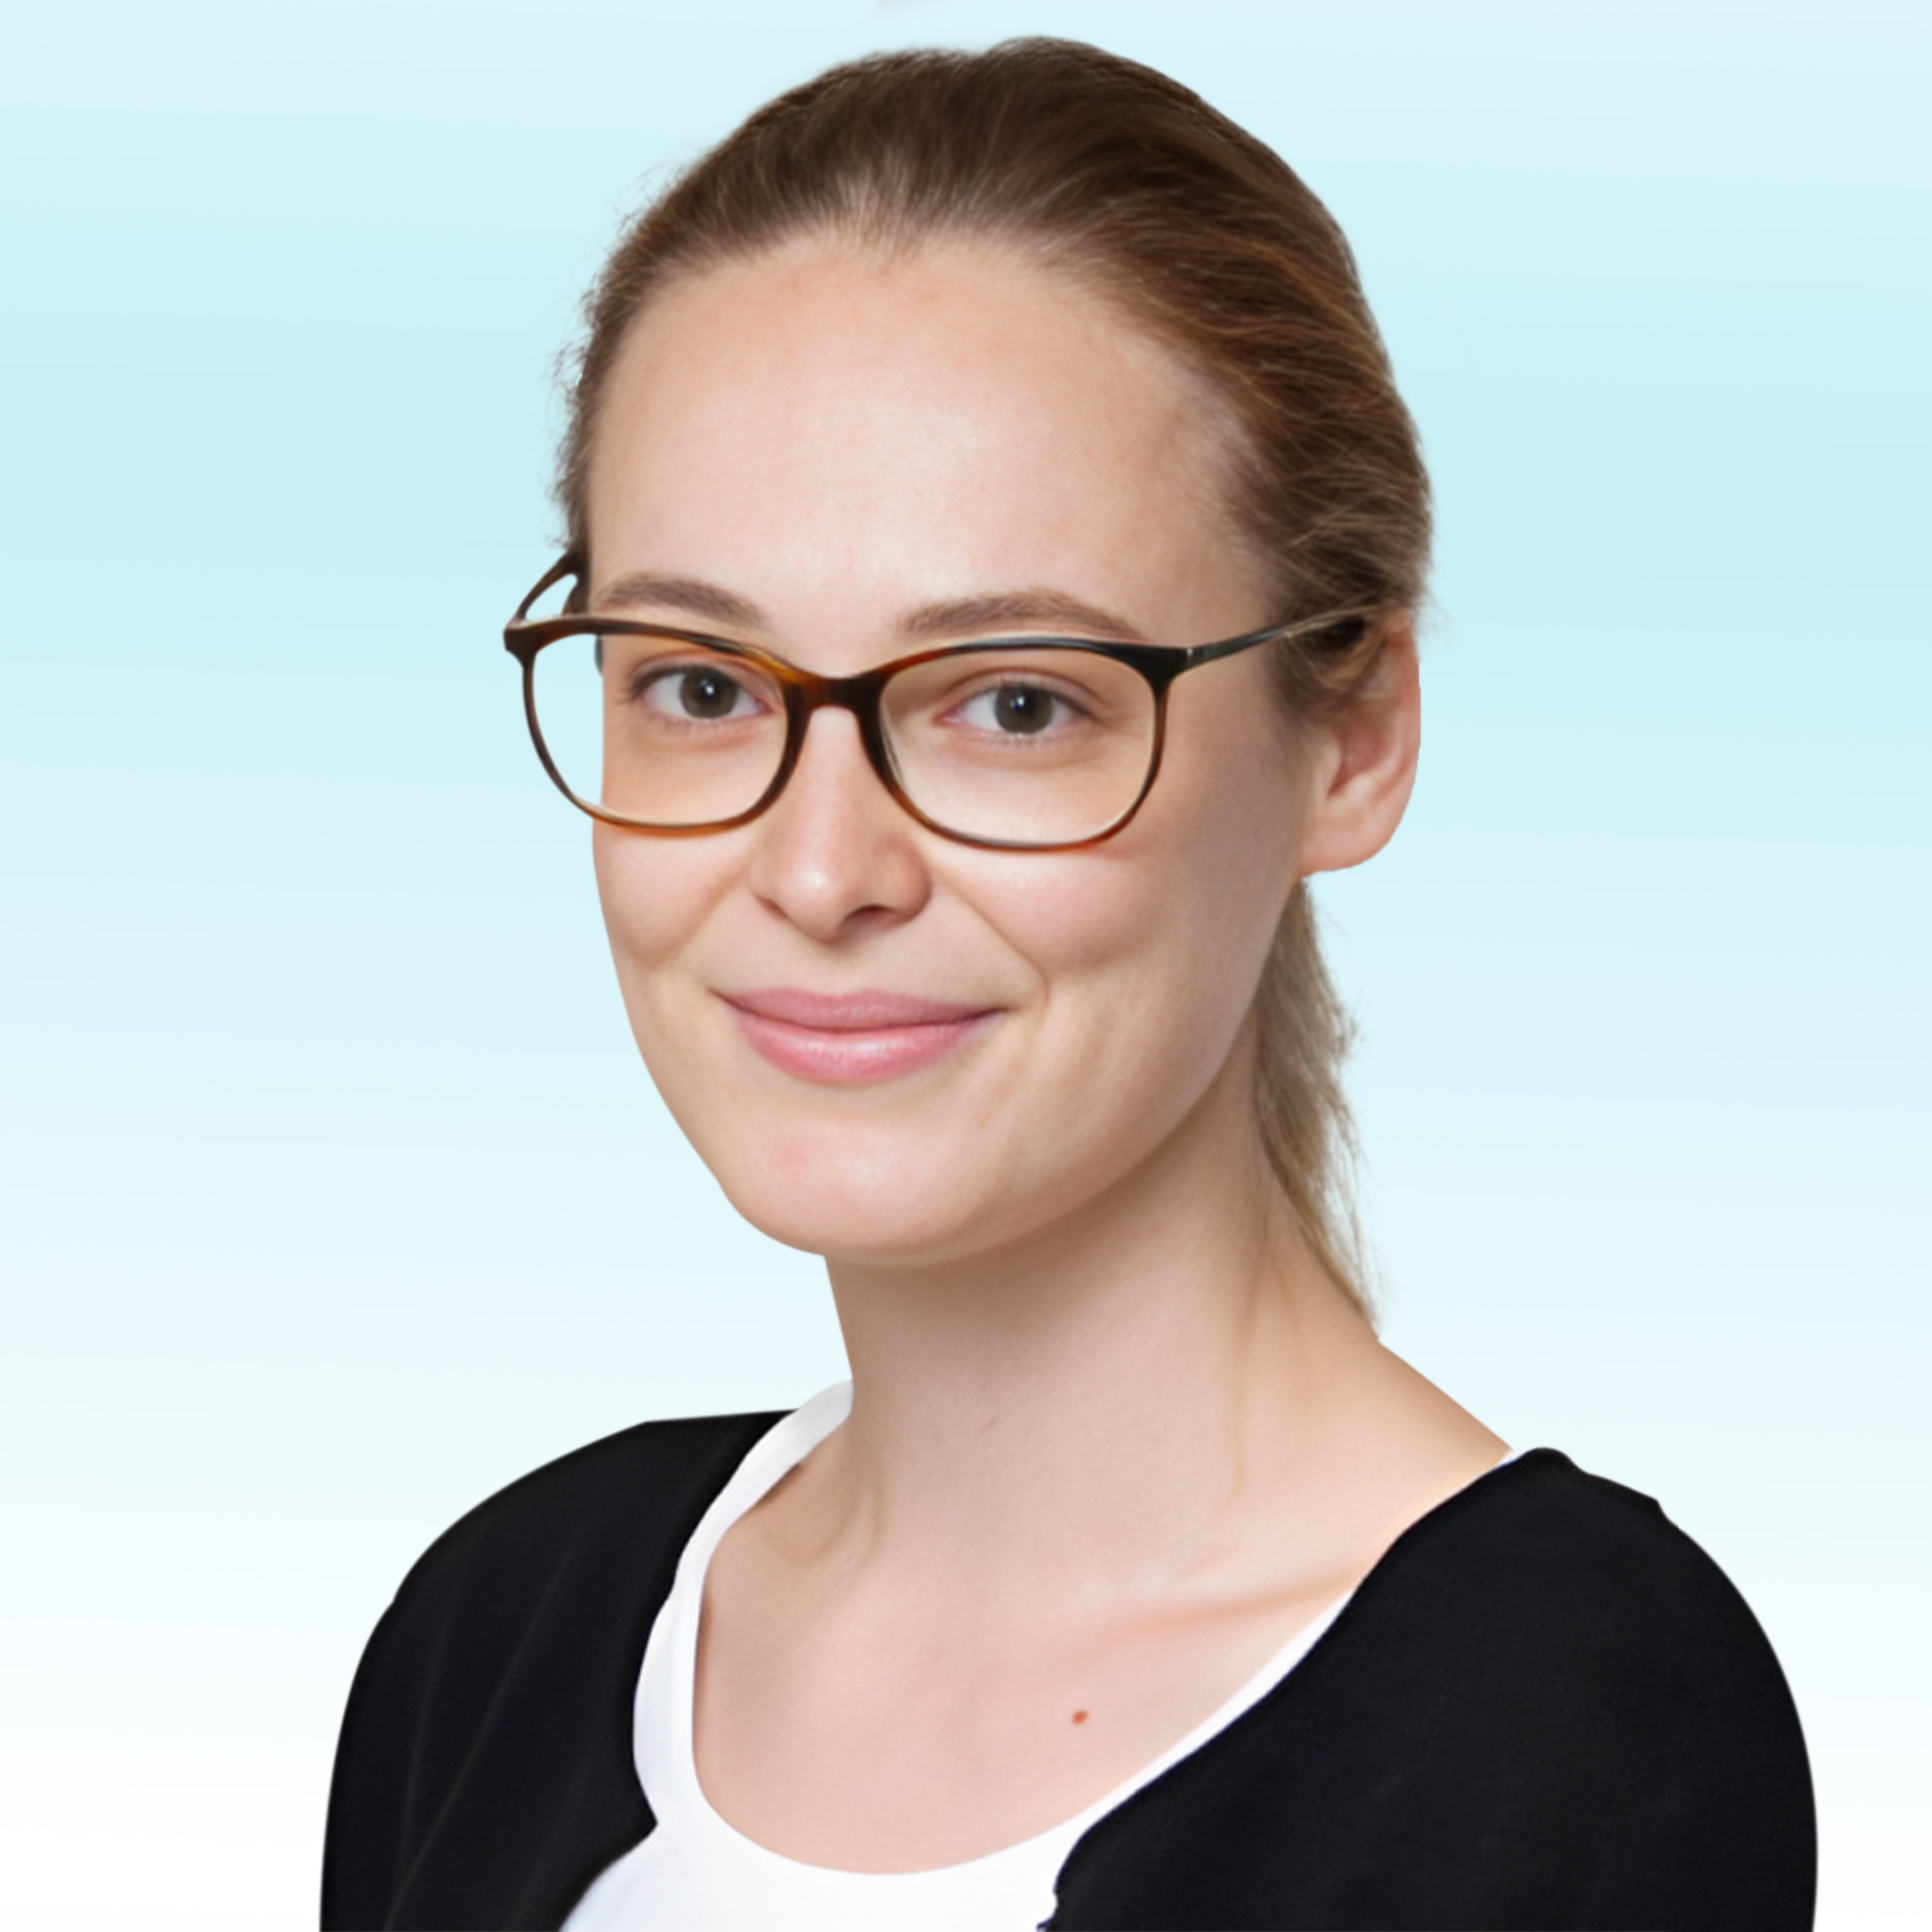 Dermatologue, Dr. med. Meike Kaulfuss